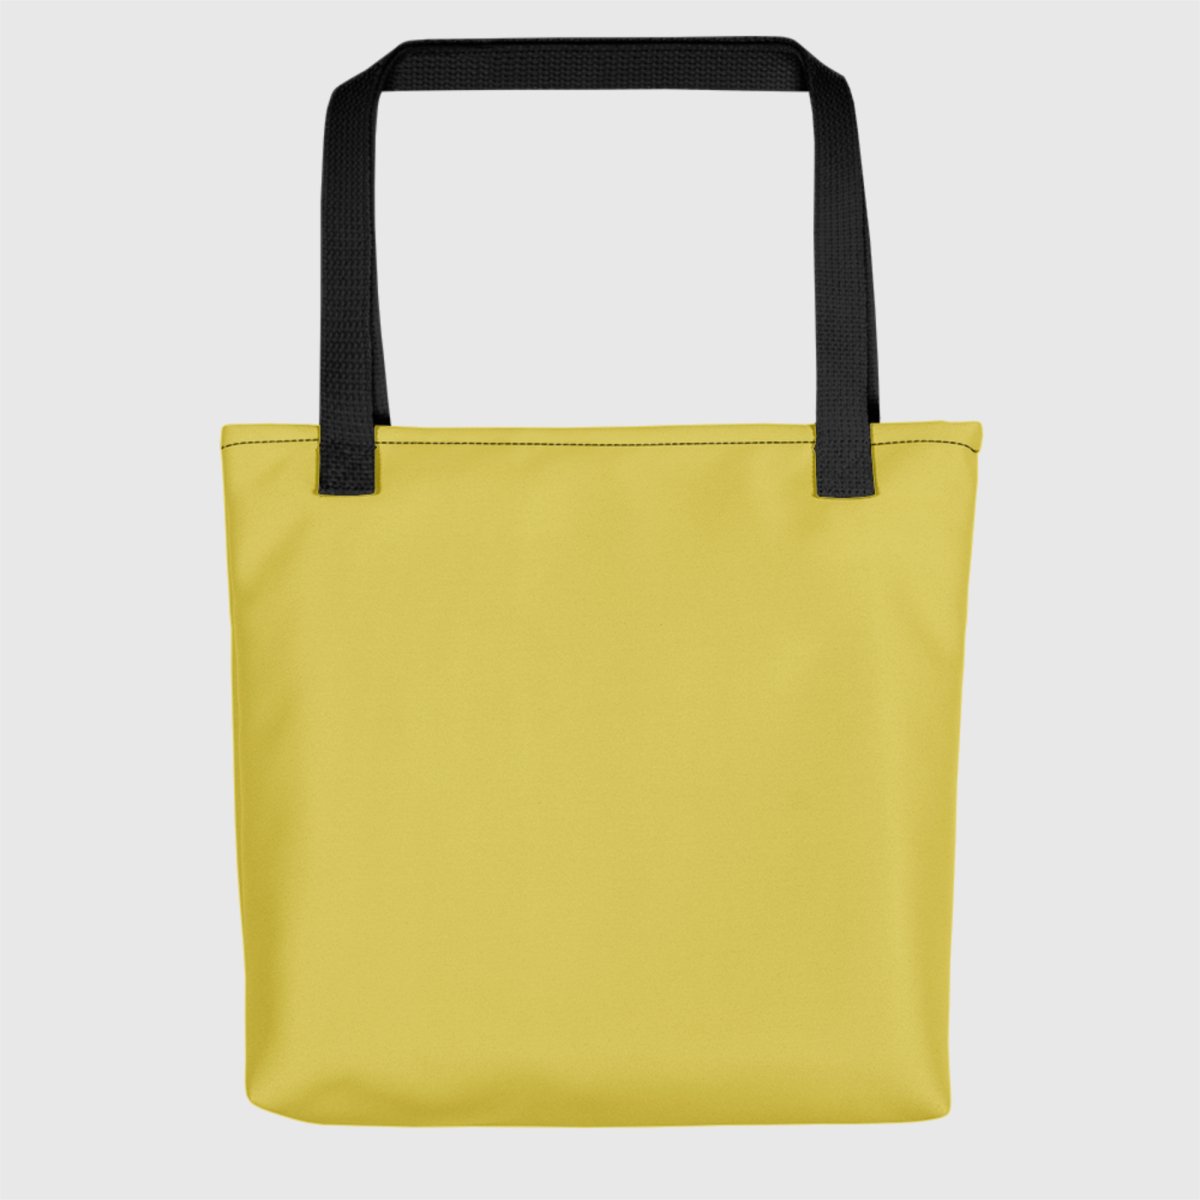 Golden Retriever Pop Art Yellow Tote Bag - Funny Nikko